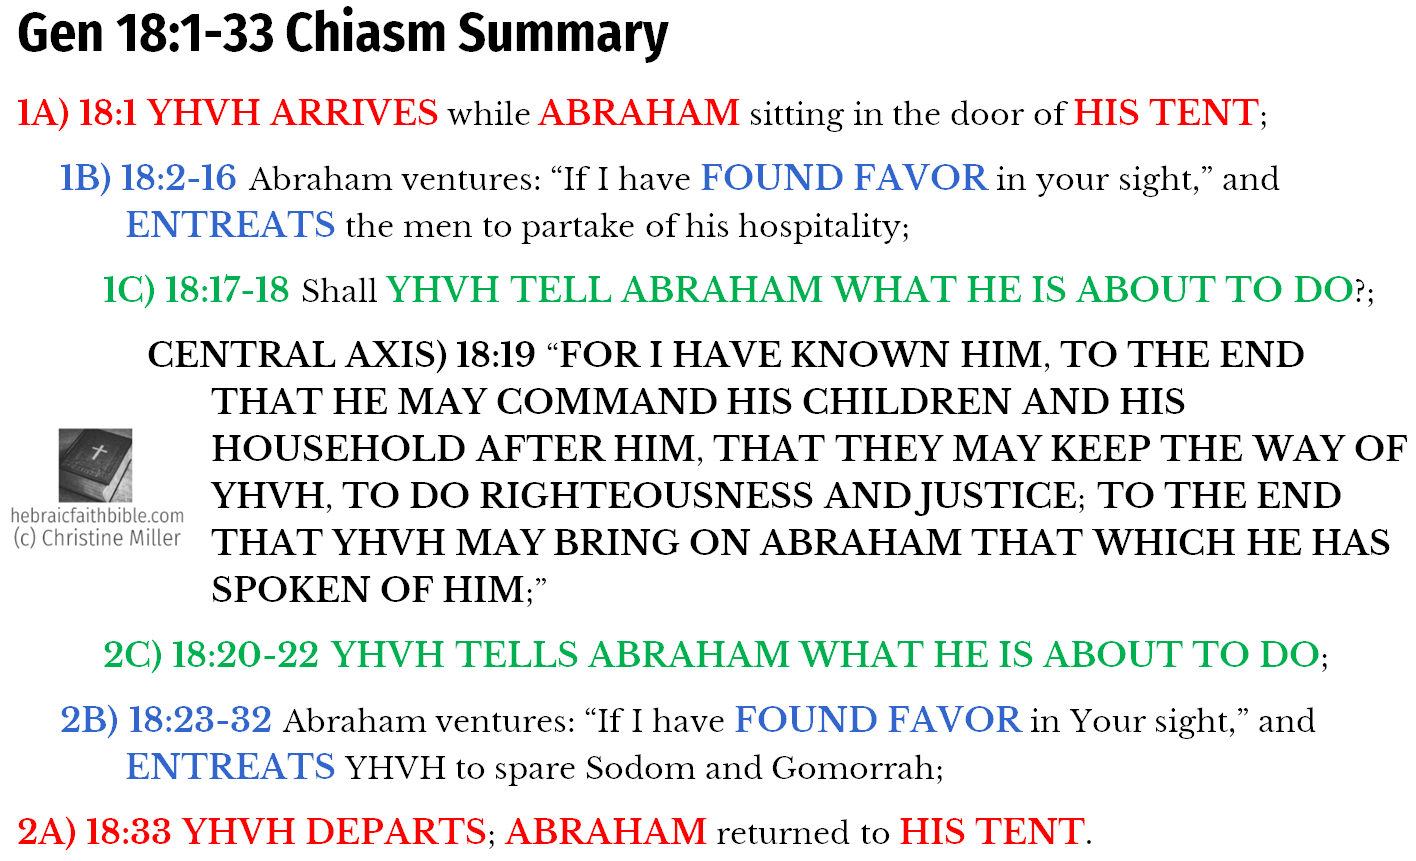 Gen 18:1-33 Chiasm Summary | hebraicfaithbible.com